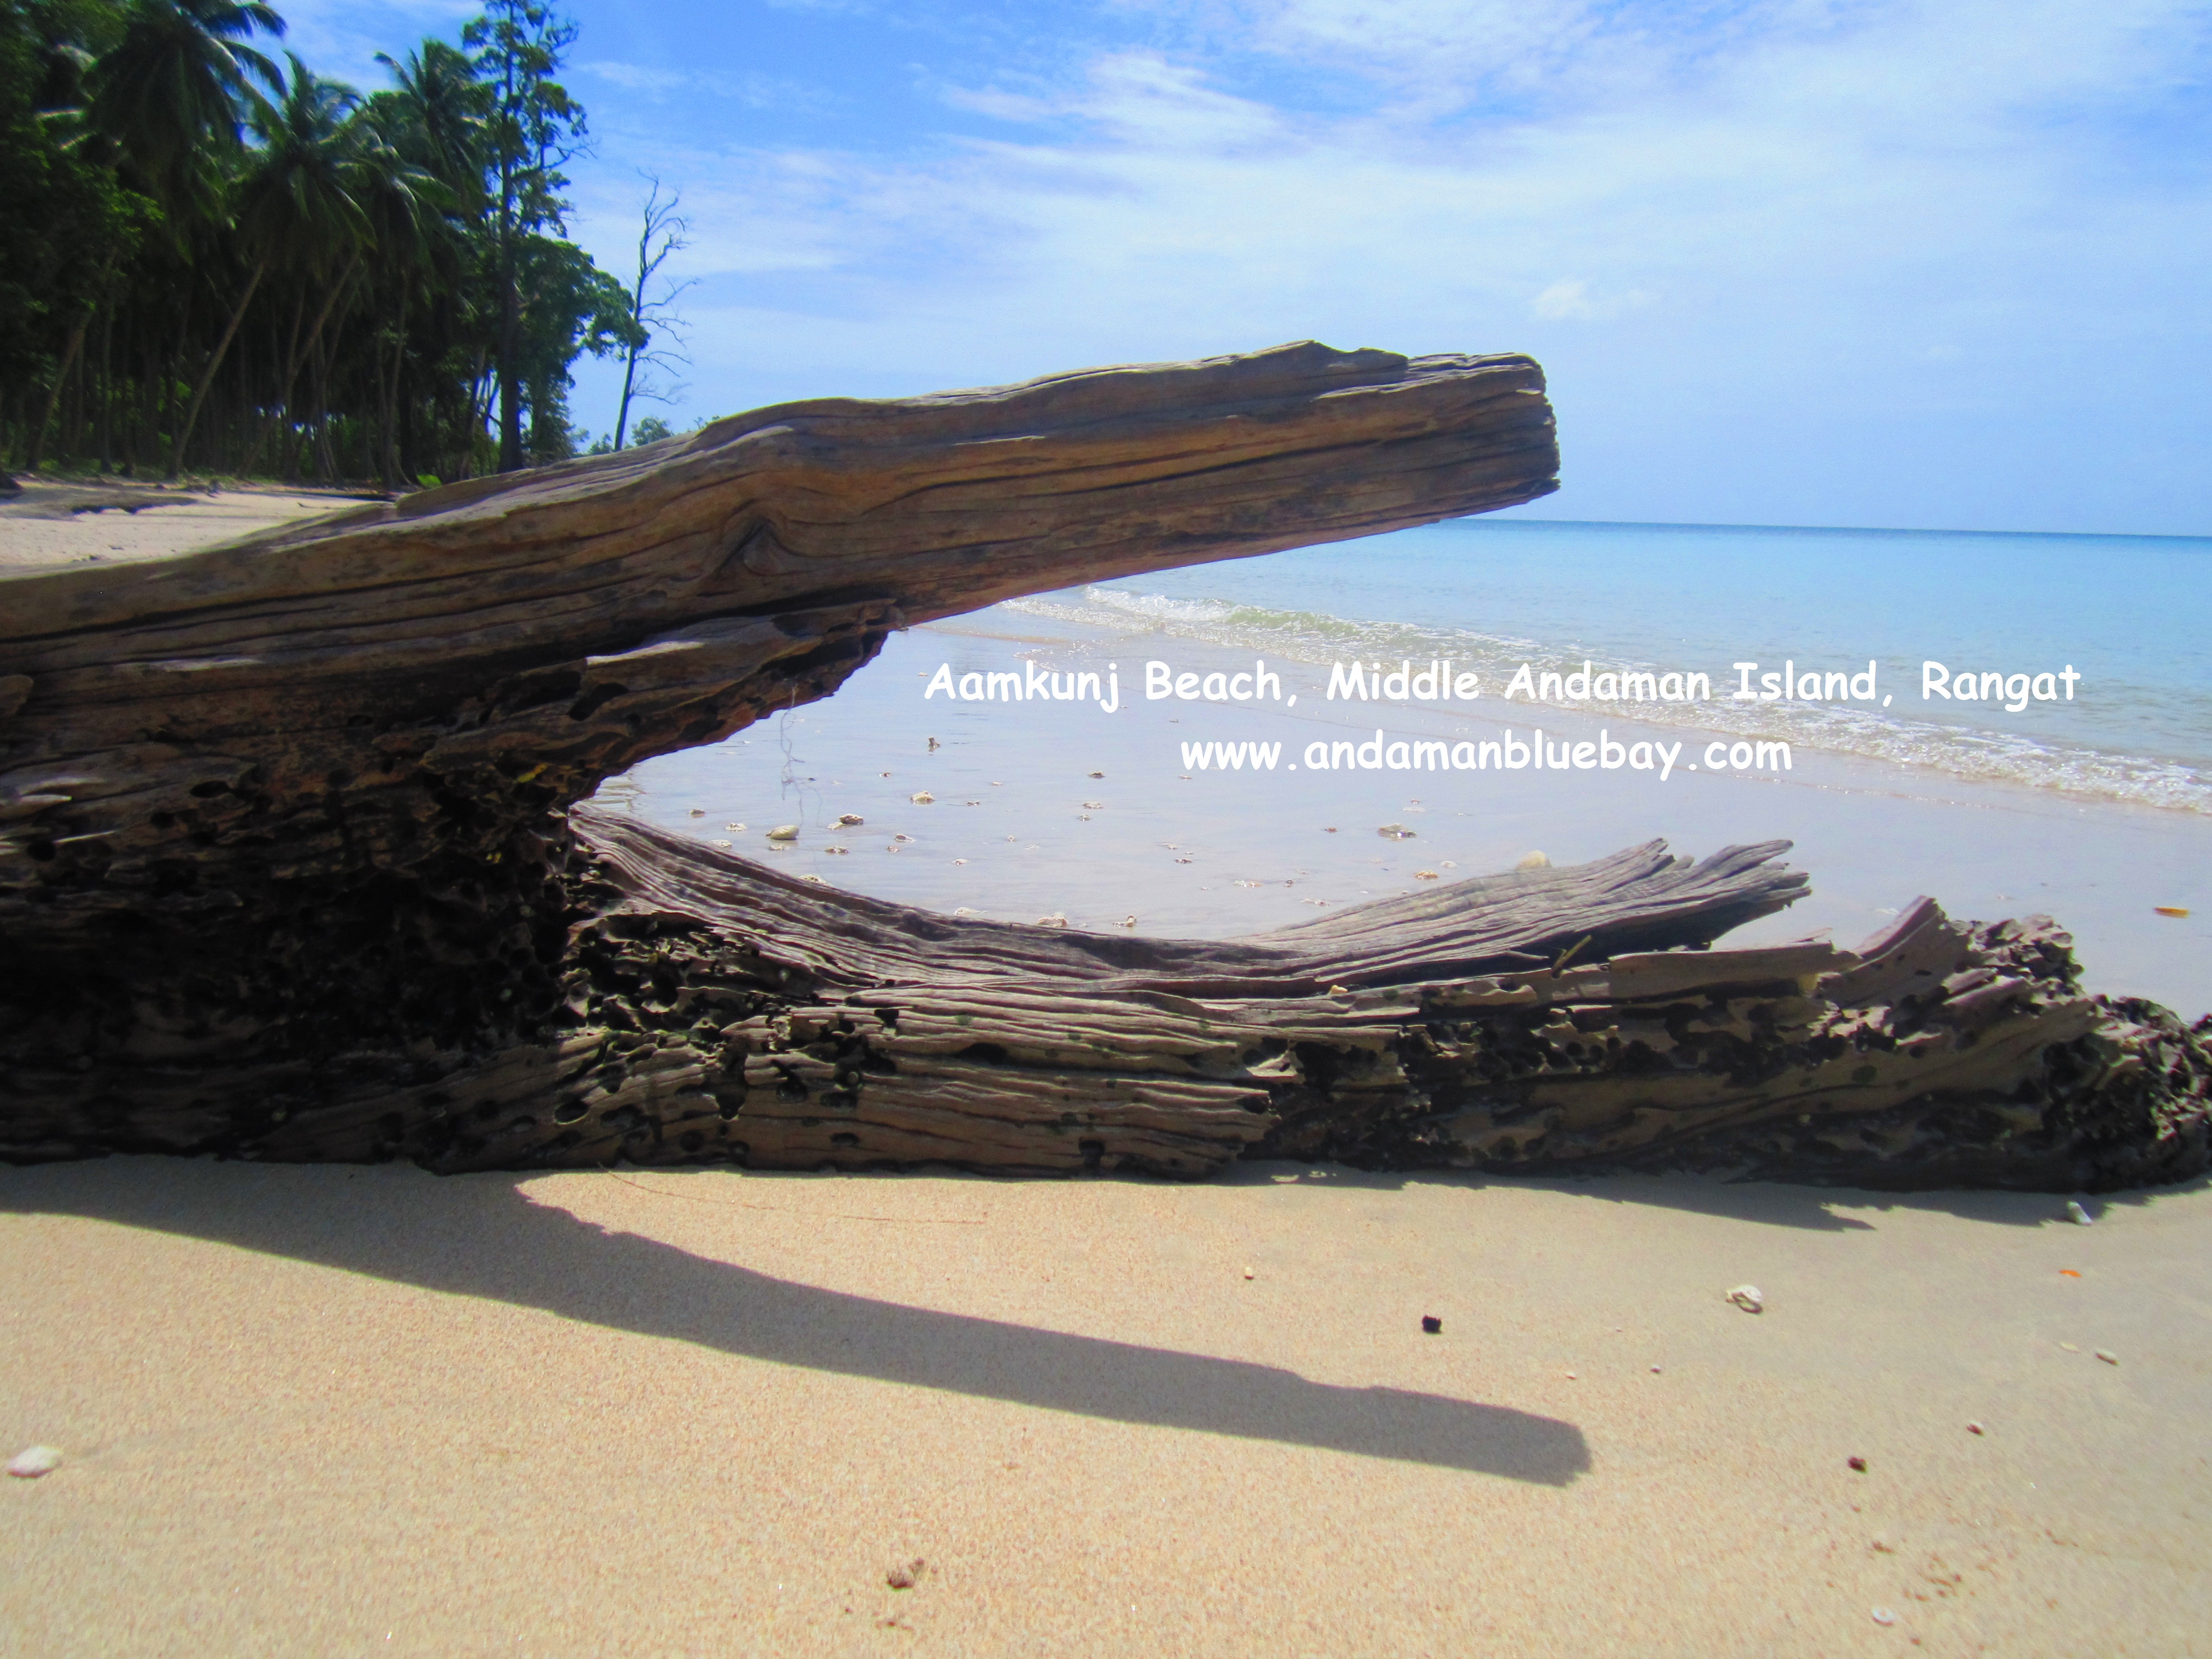 Rangat Middle Andaman Island